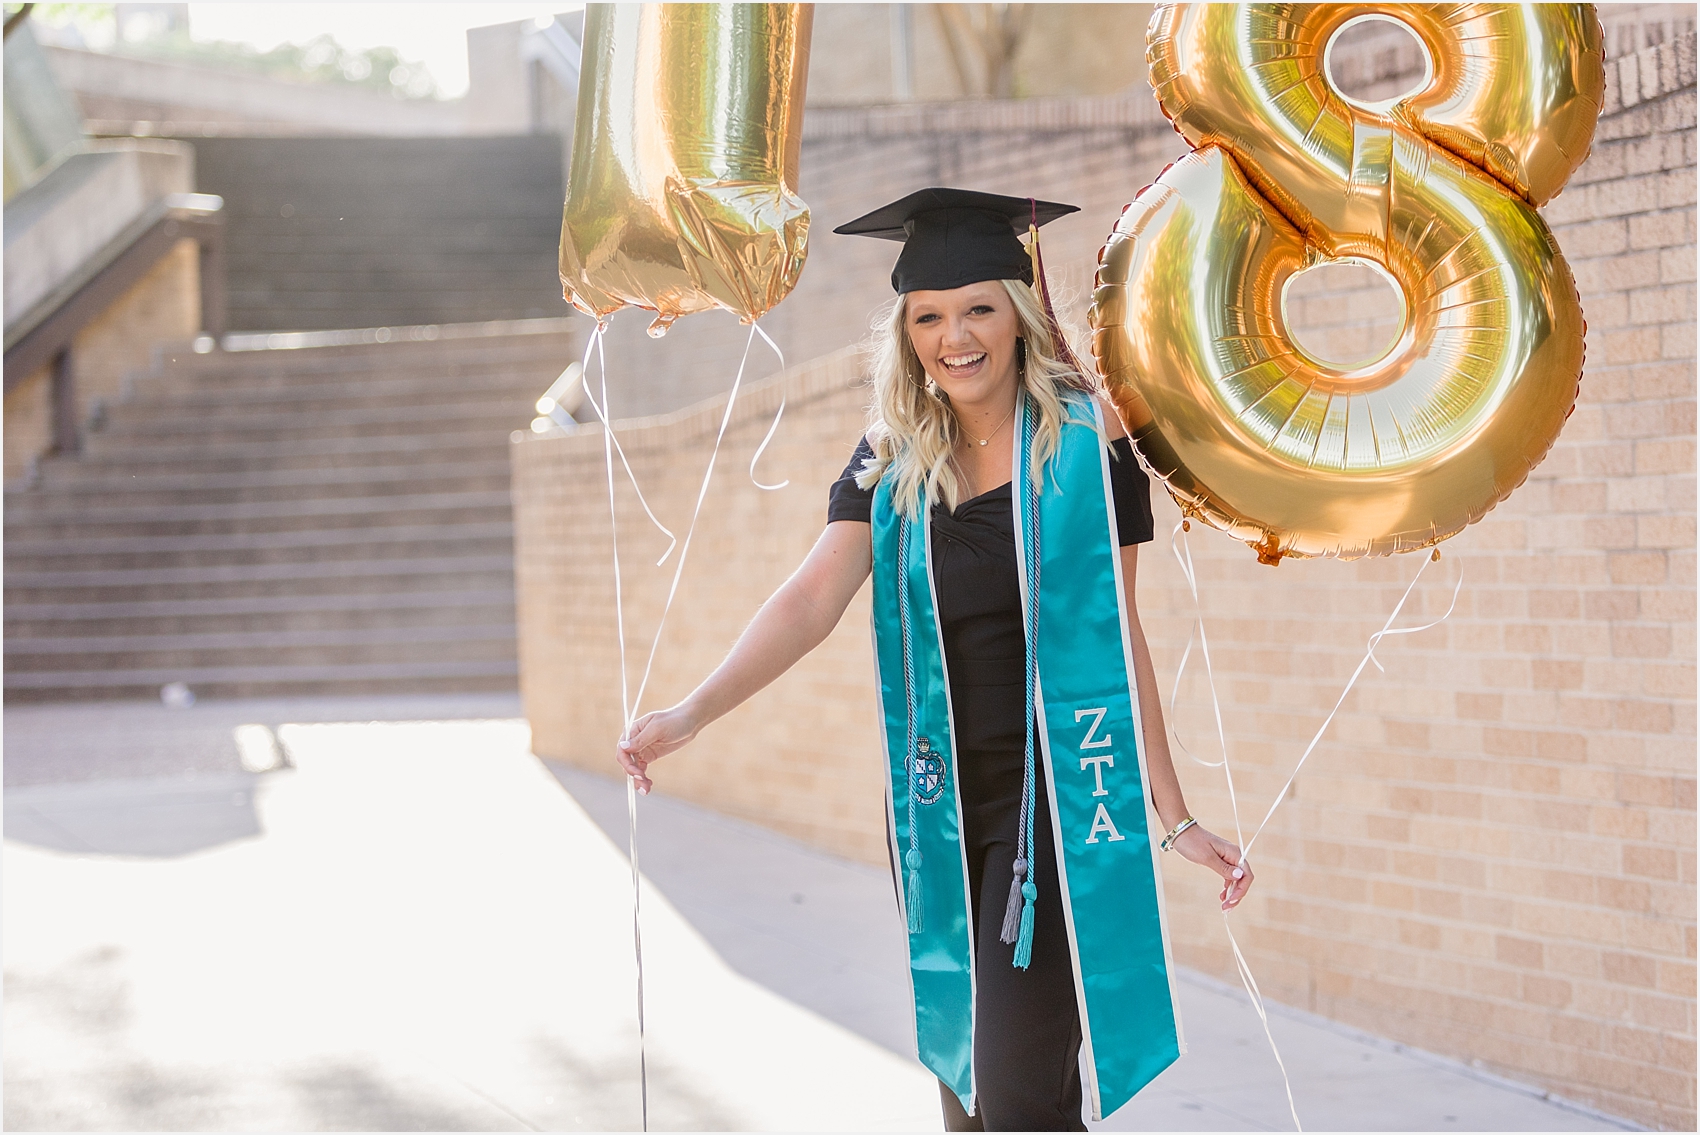 Texas State University Senior Portrait Session 2018 Graduate Zeta Tau Alpha Cap Gown Balloons